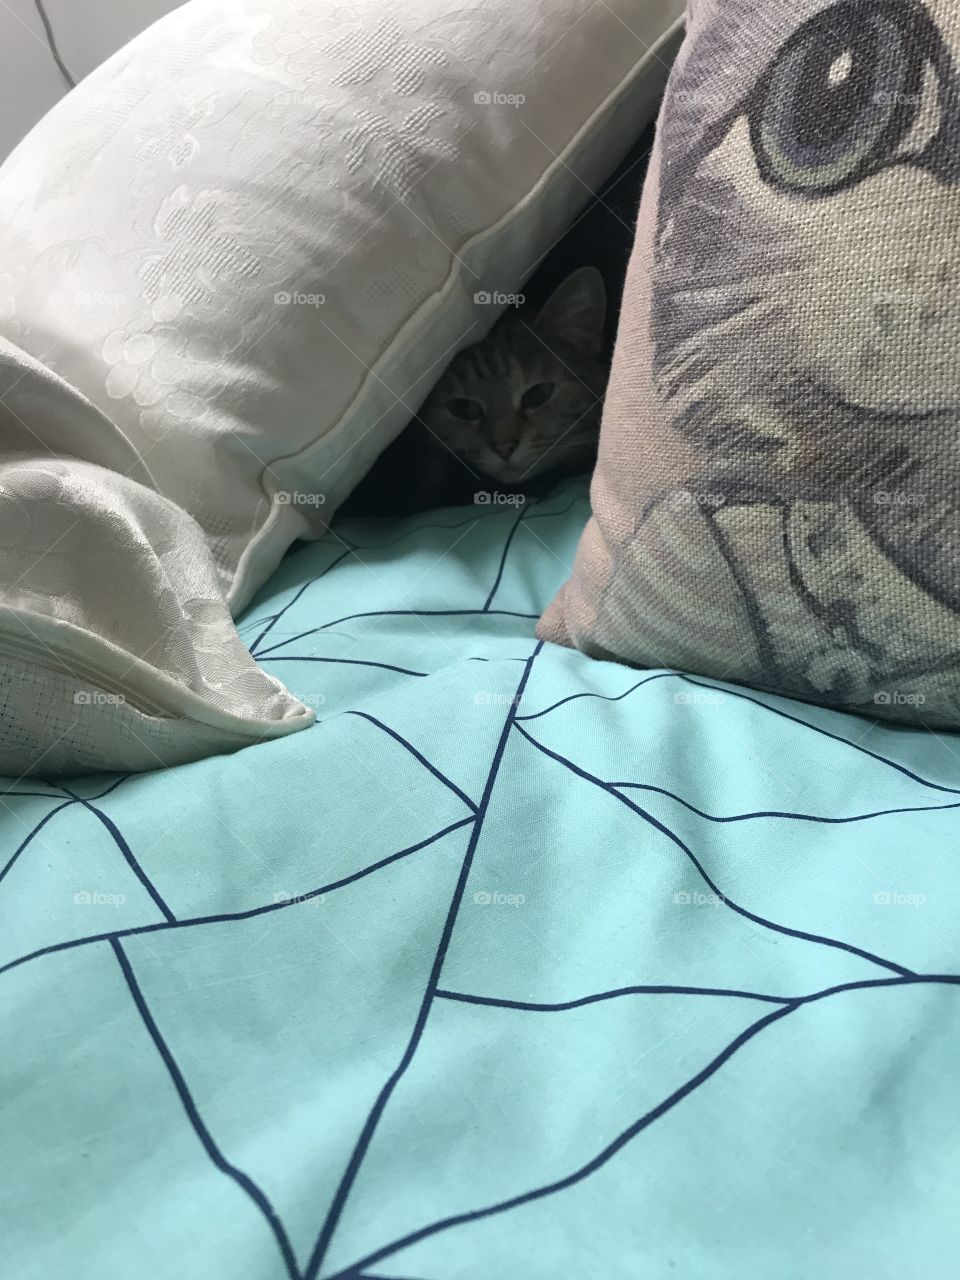 Hiding under all the pillows 